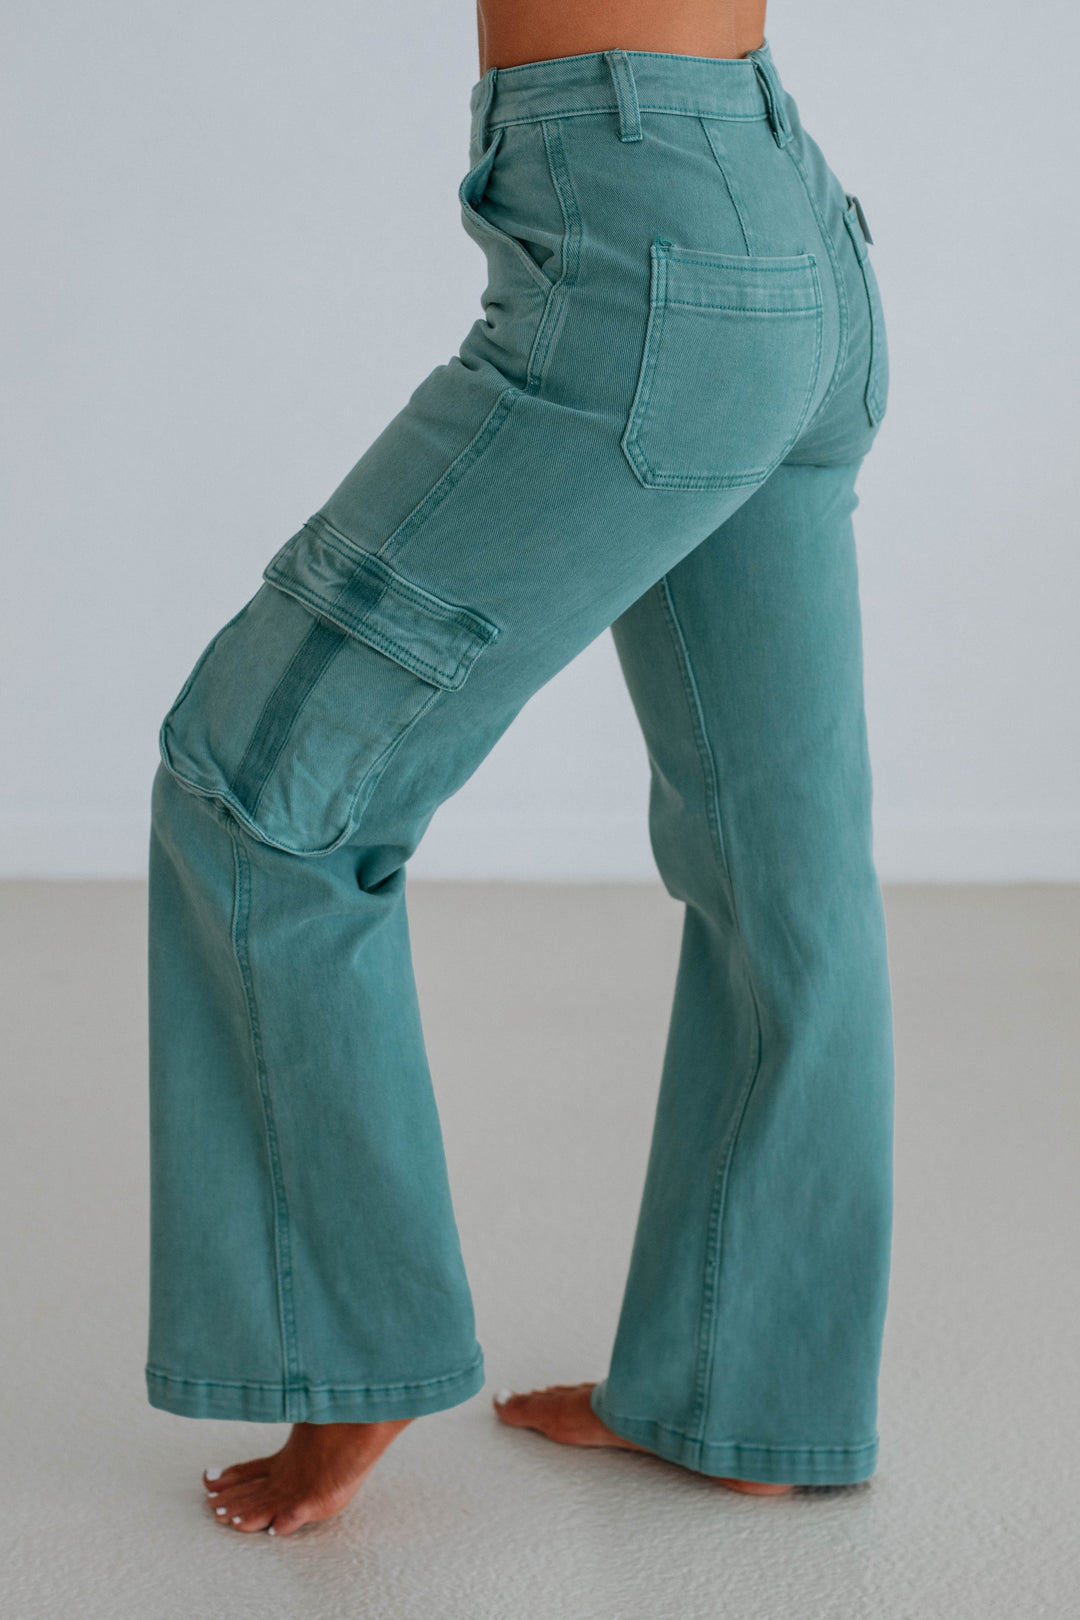 Kalani Risen Cargo Jeans - Jade